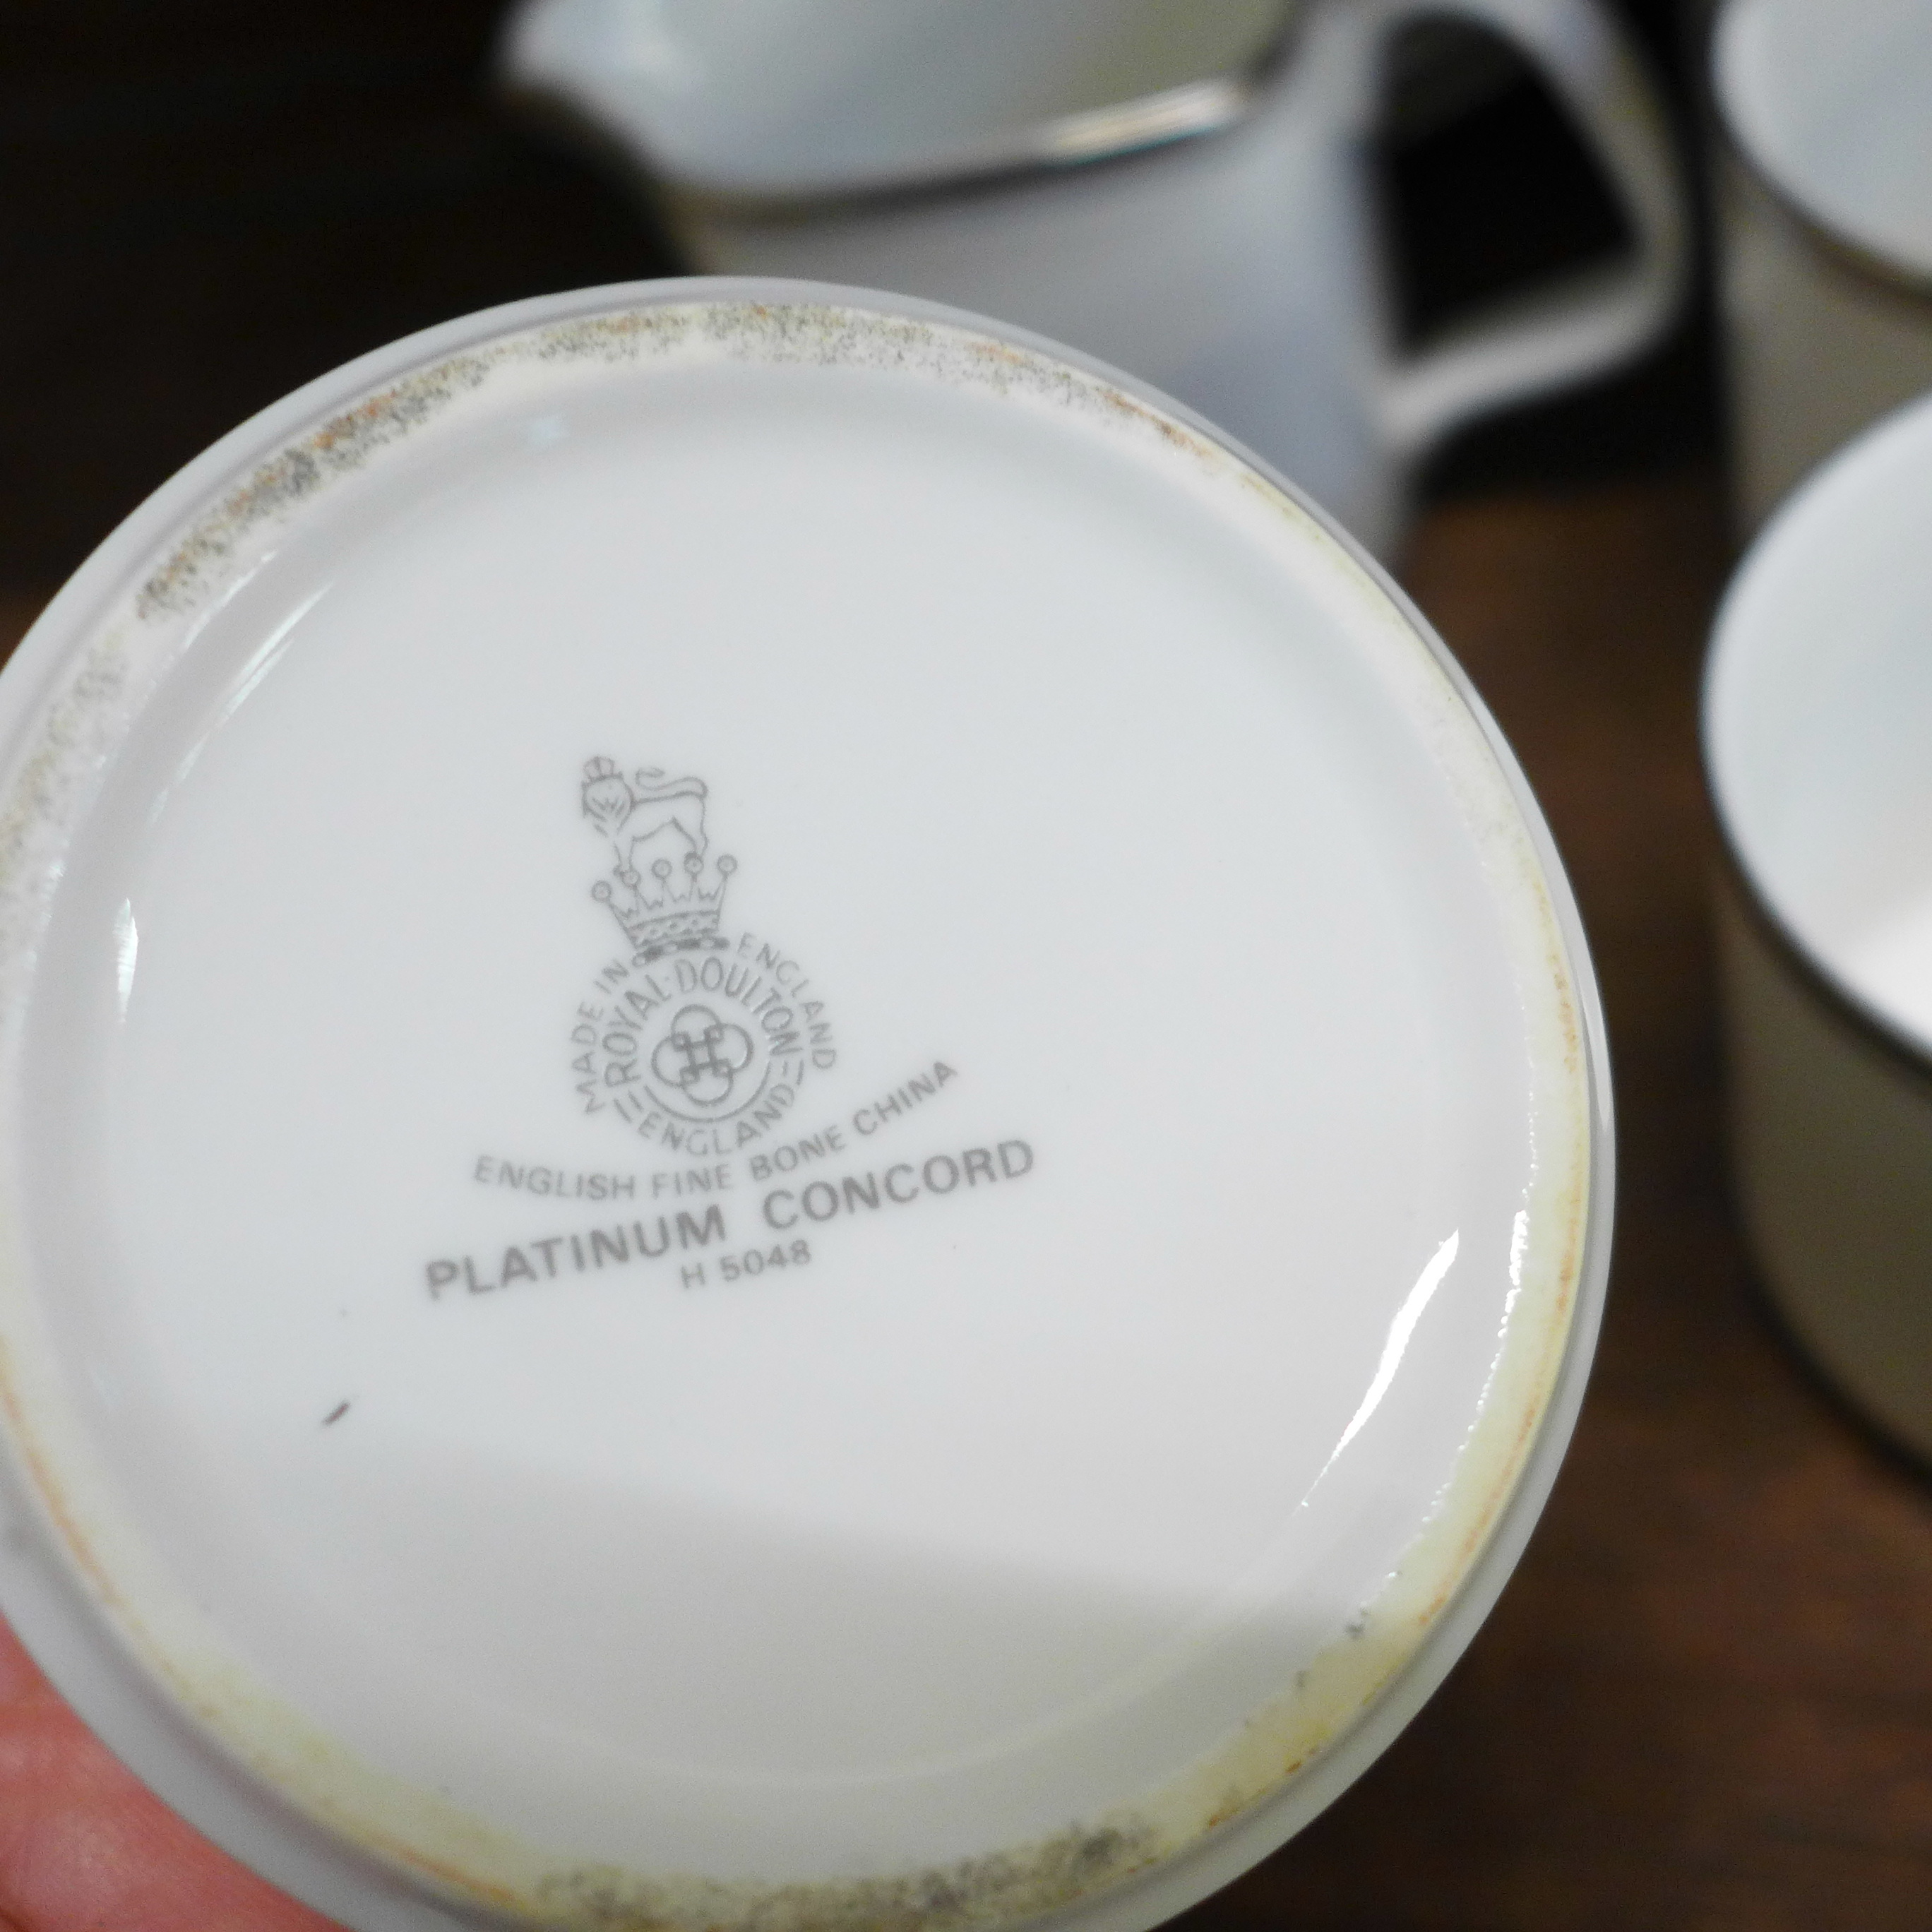 A Royal Doulton Platinum Concorde set comprising a coffee pot, milk jug, sugar bowl and six cups and - Image 3 of 4